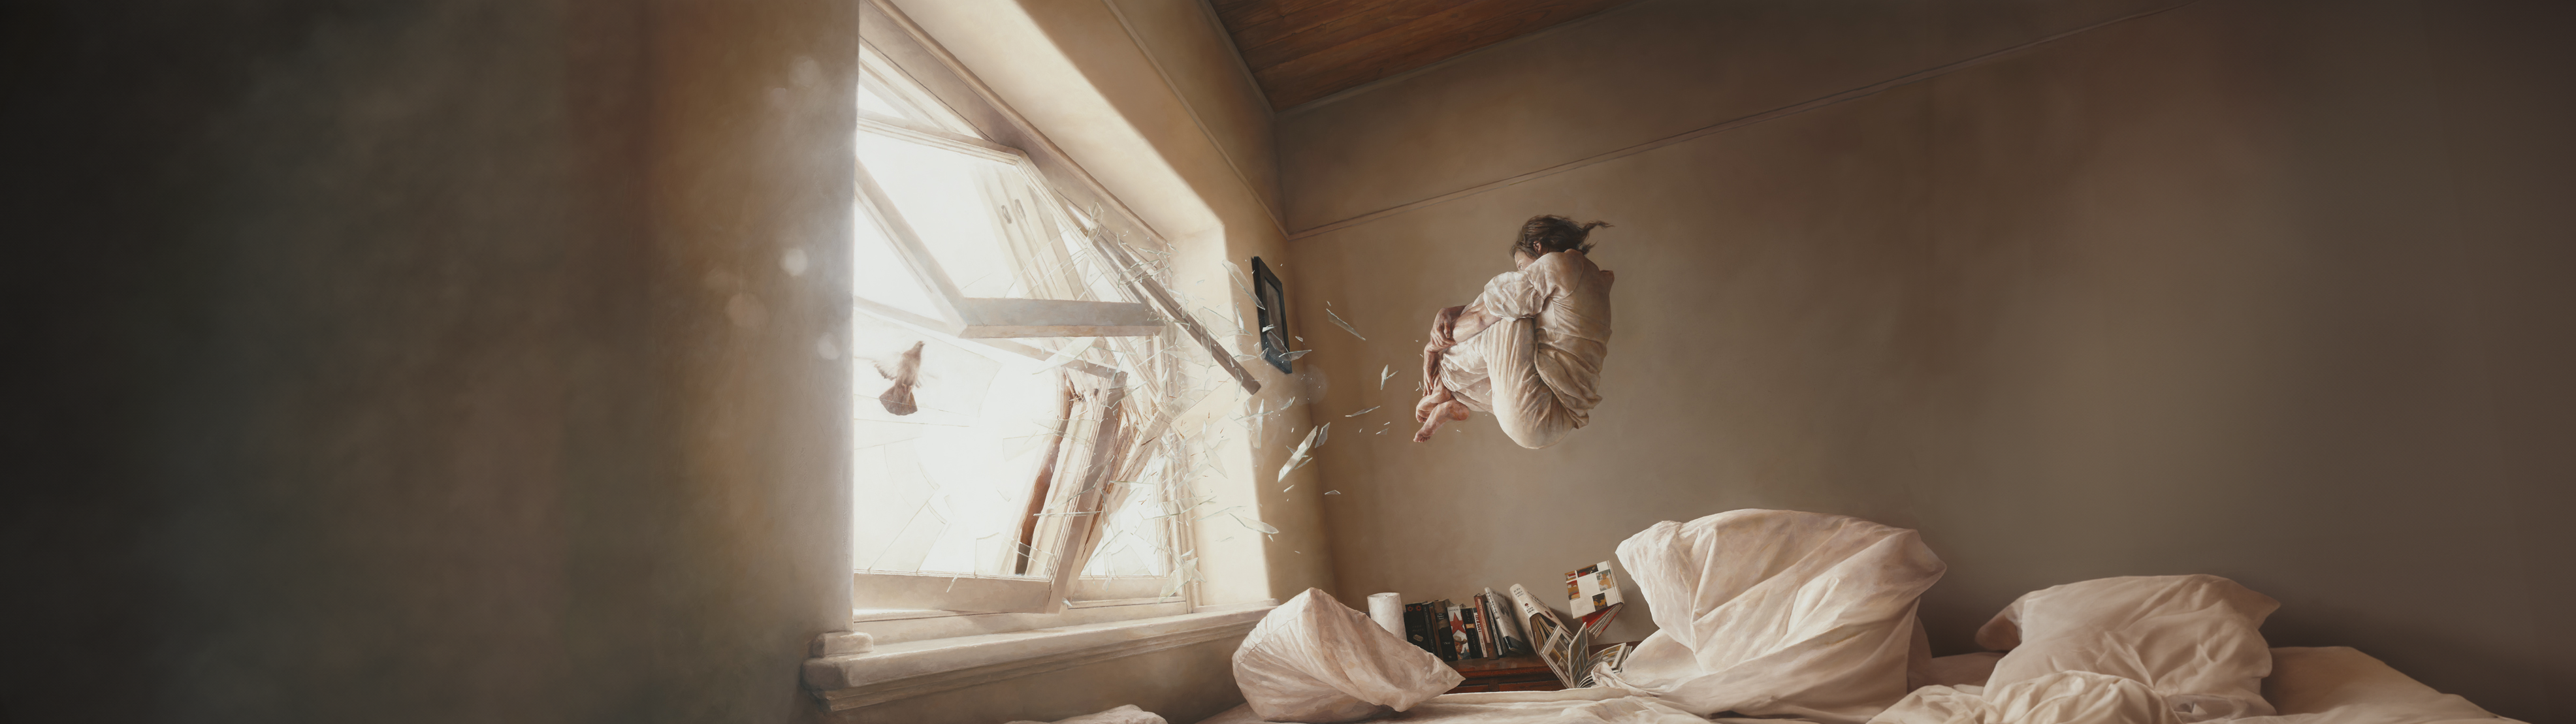 Jeremy Geddes Oil Painting Ultrawide Bedroom Broken Glass Artwork Window Pillow Painting 3944x1109